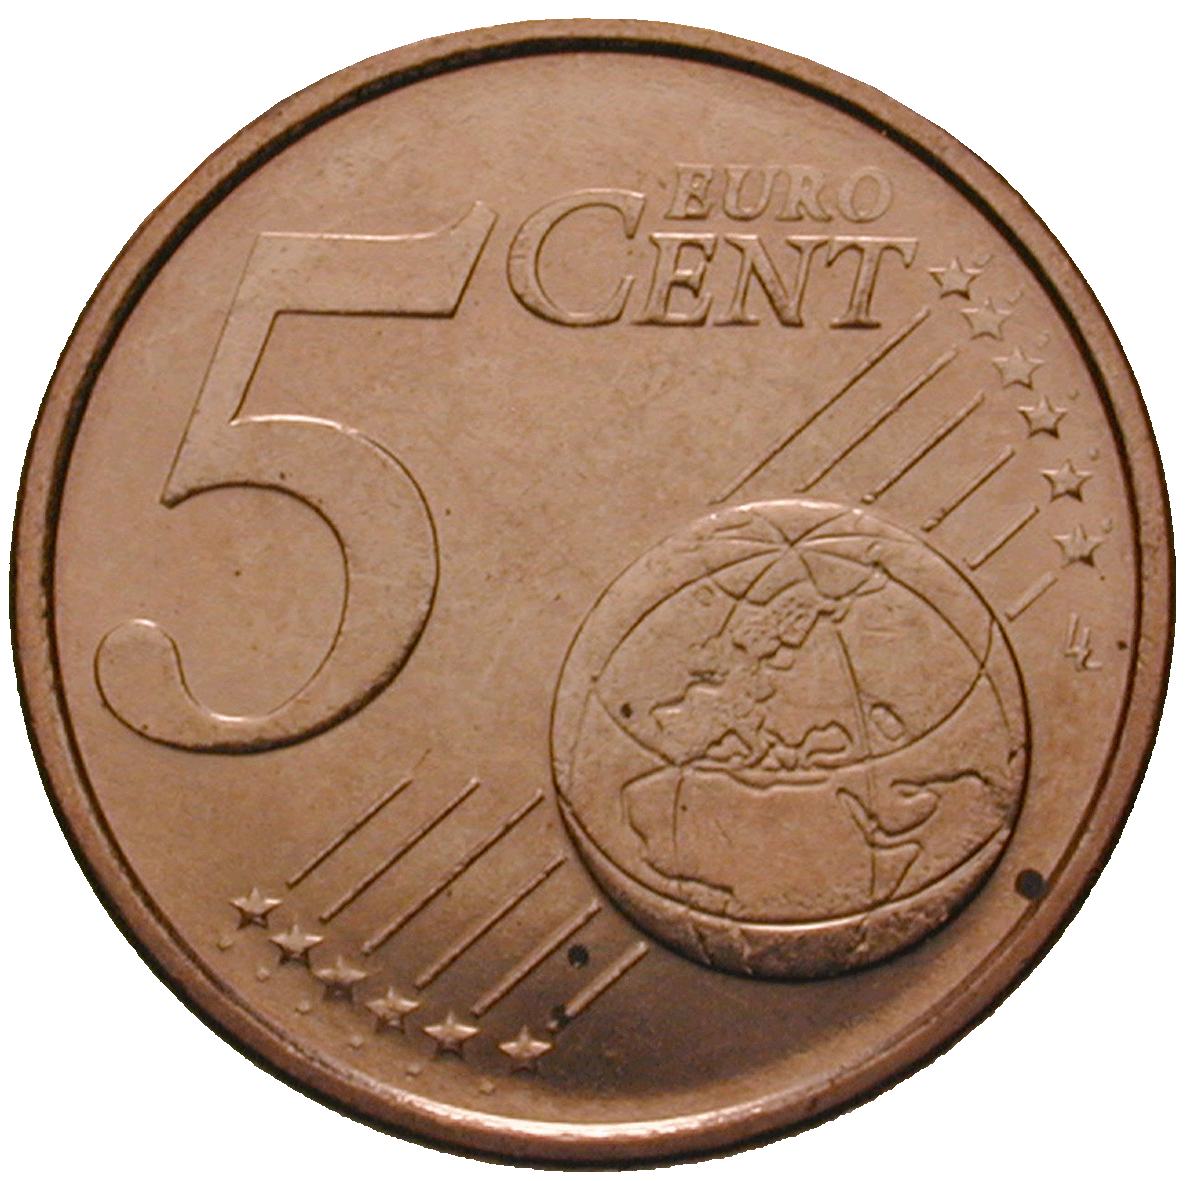 Republic of Italy, 5 Euro Cent 2002 (reverse)